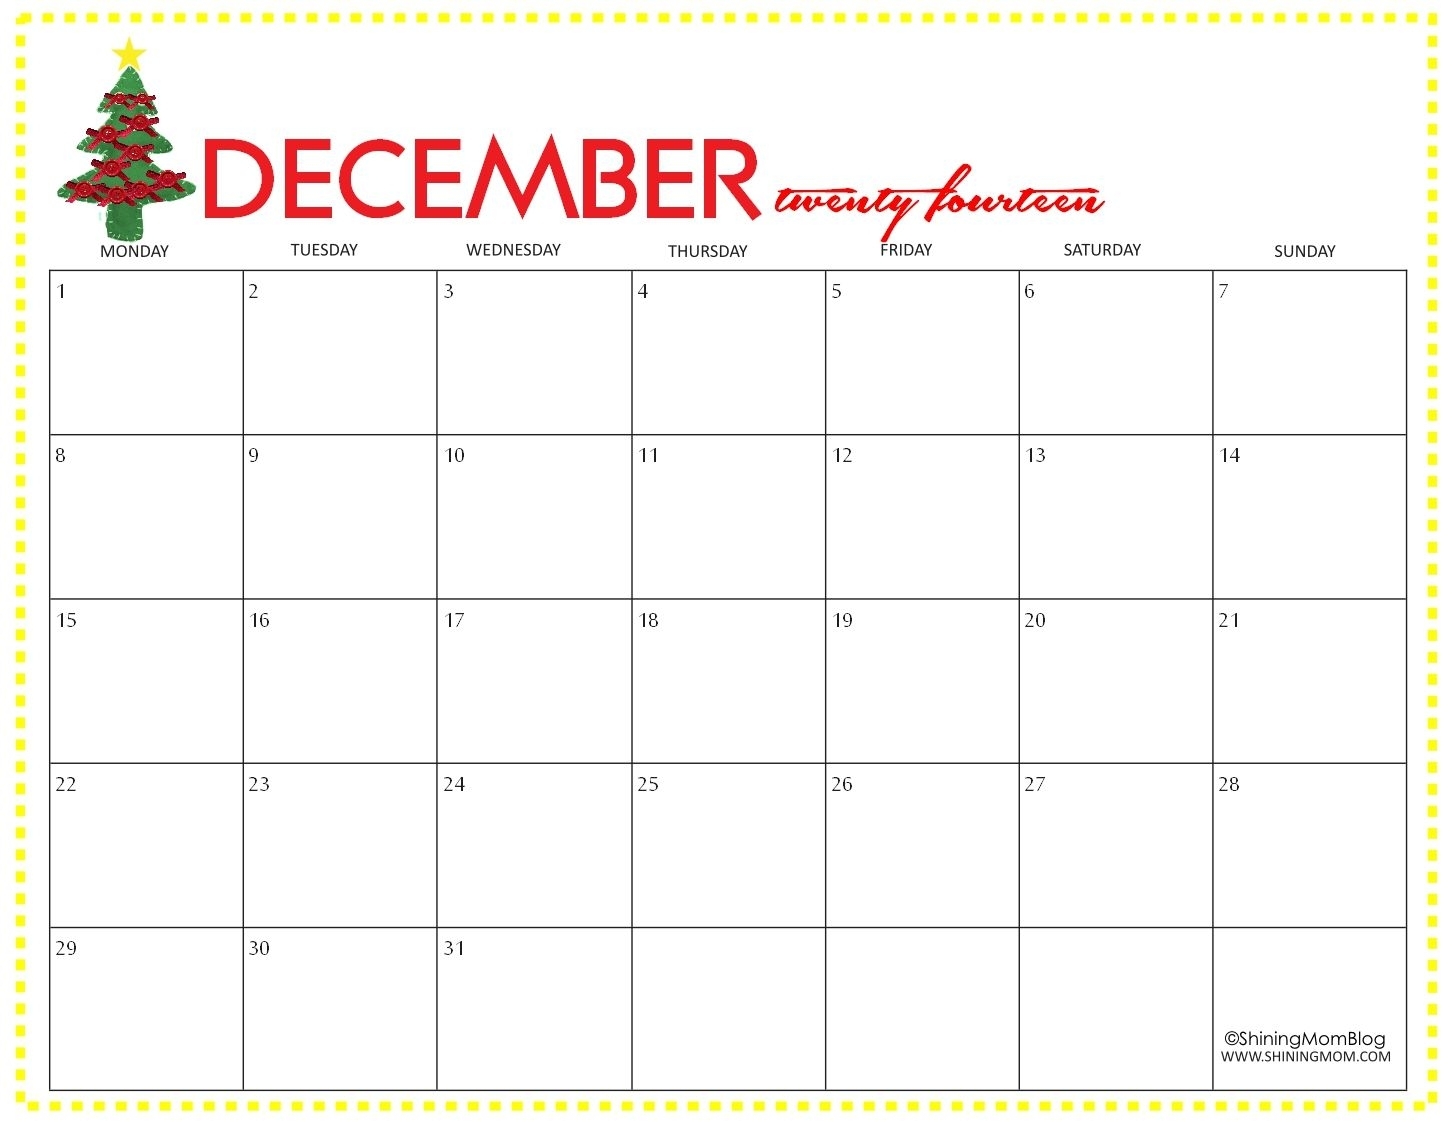 Take December Christmas Calendar Printable